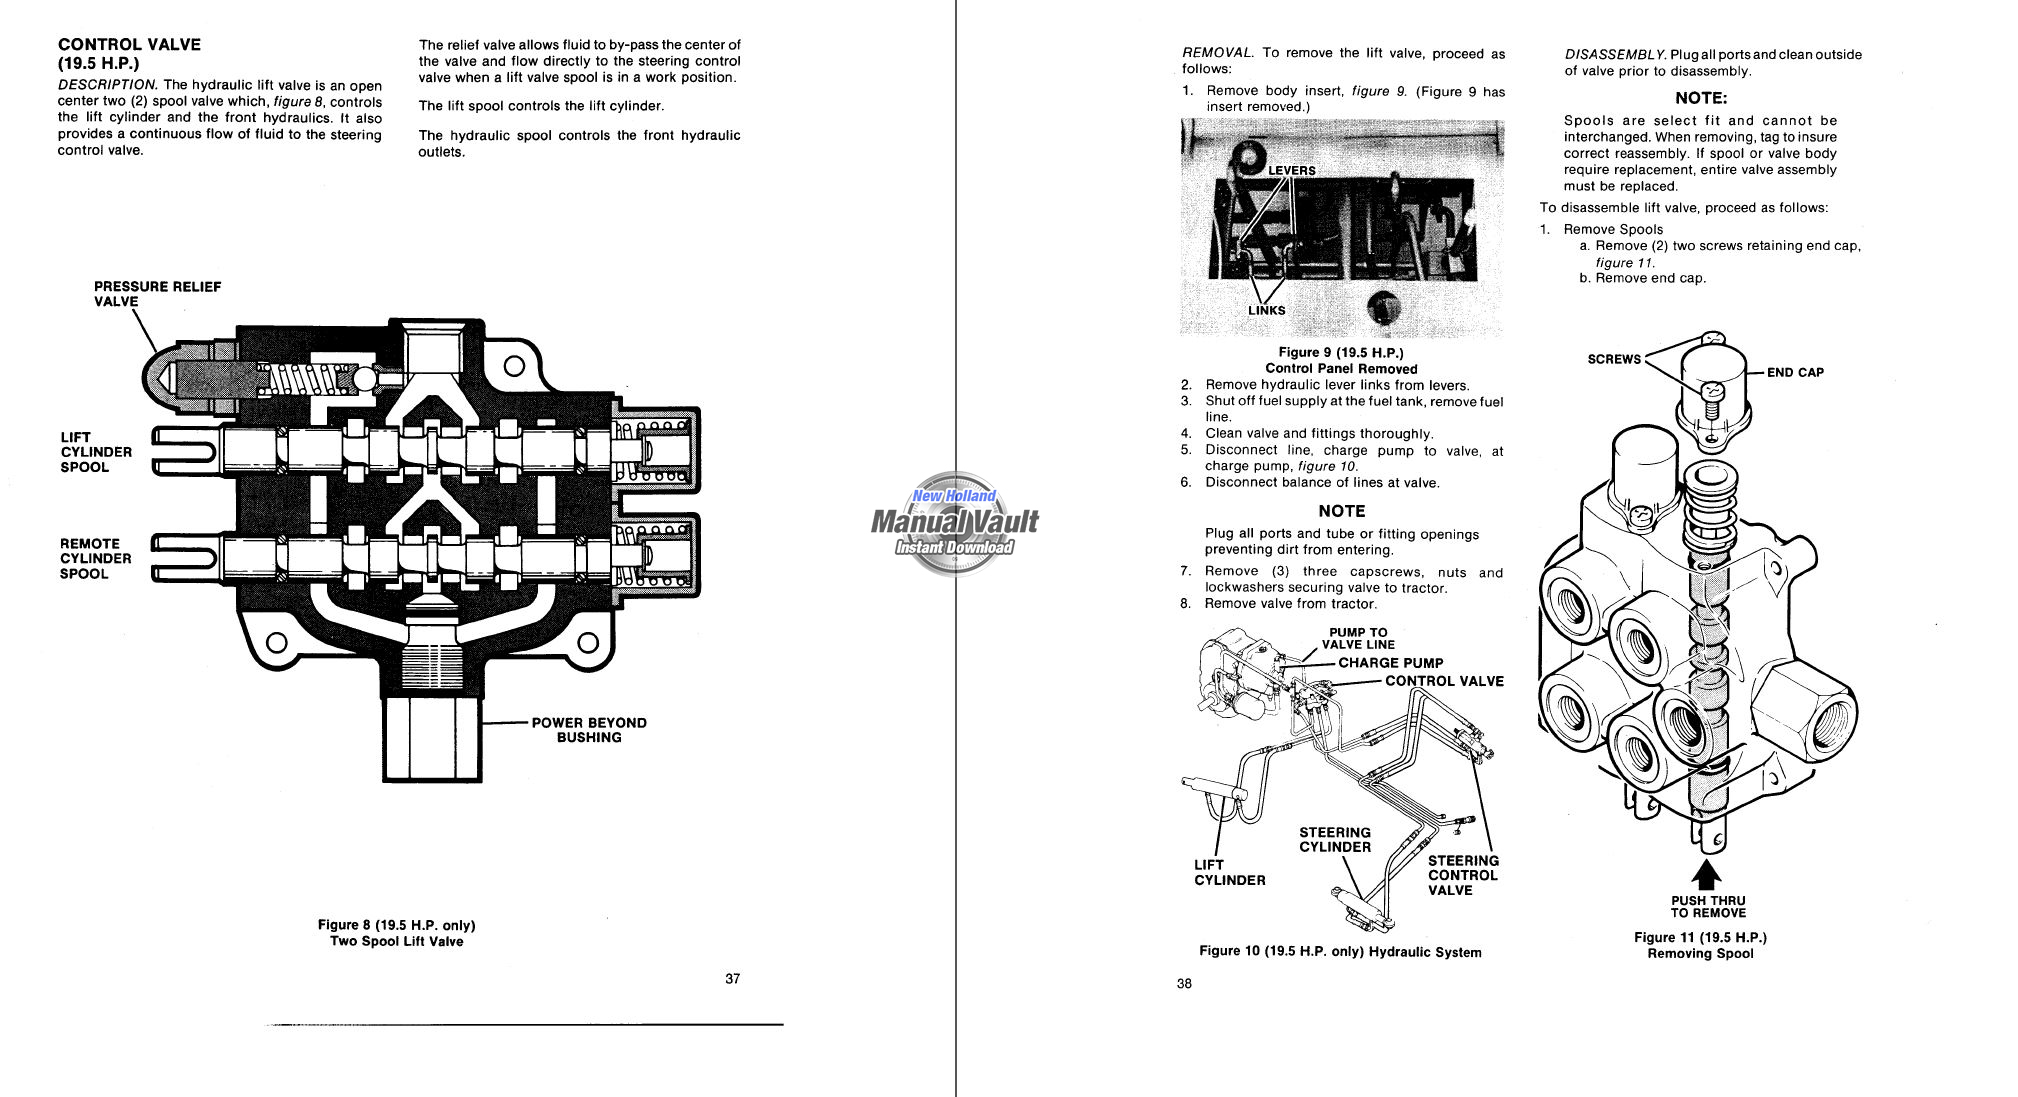 Ford Lgt 145 Service Manual